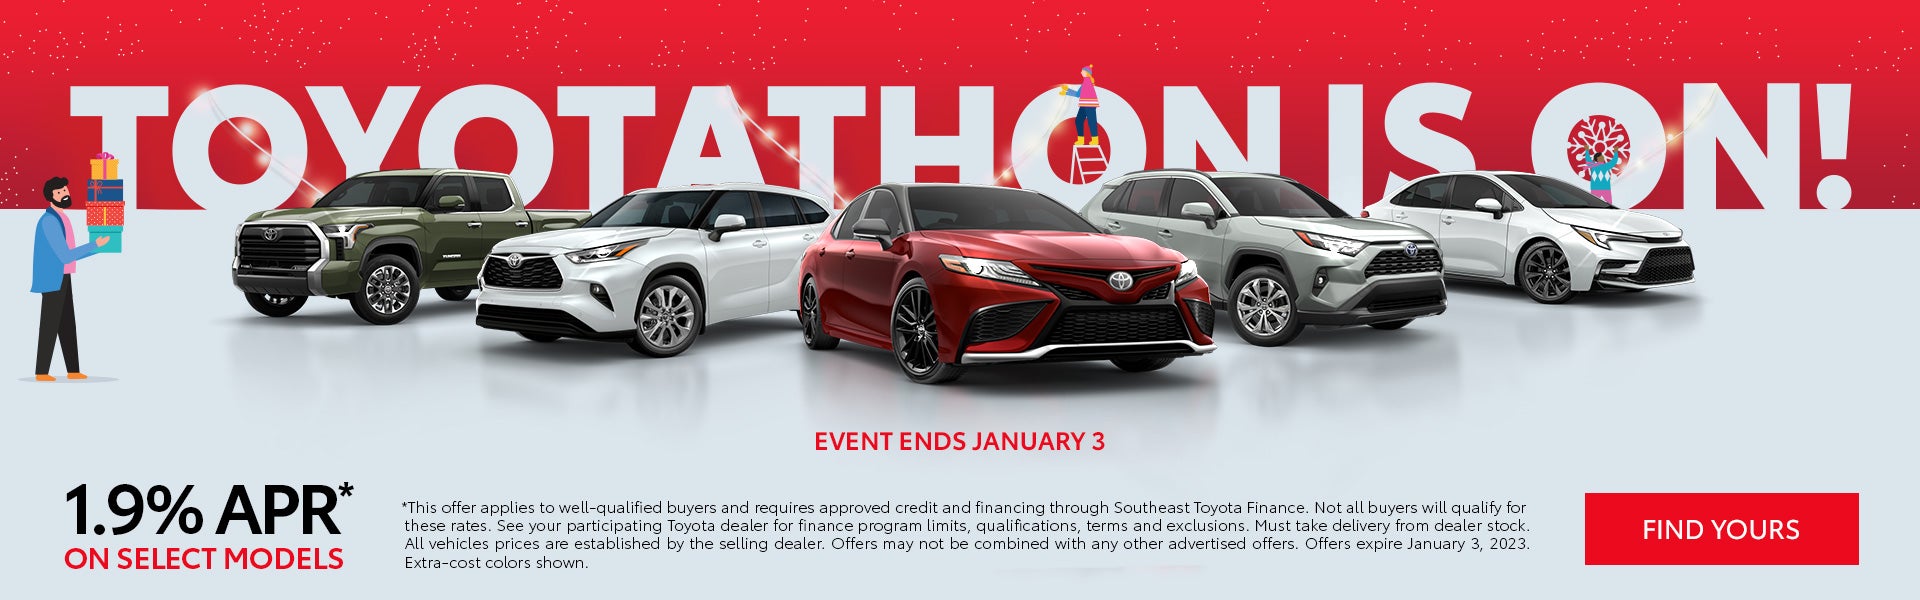 Toyotathon Sales Event Toyota of New Bern NC Dealership